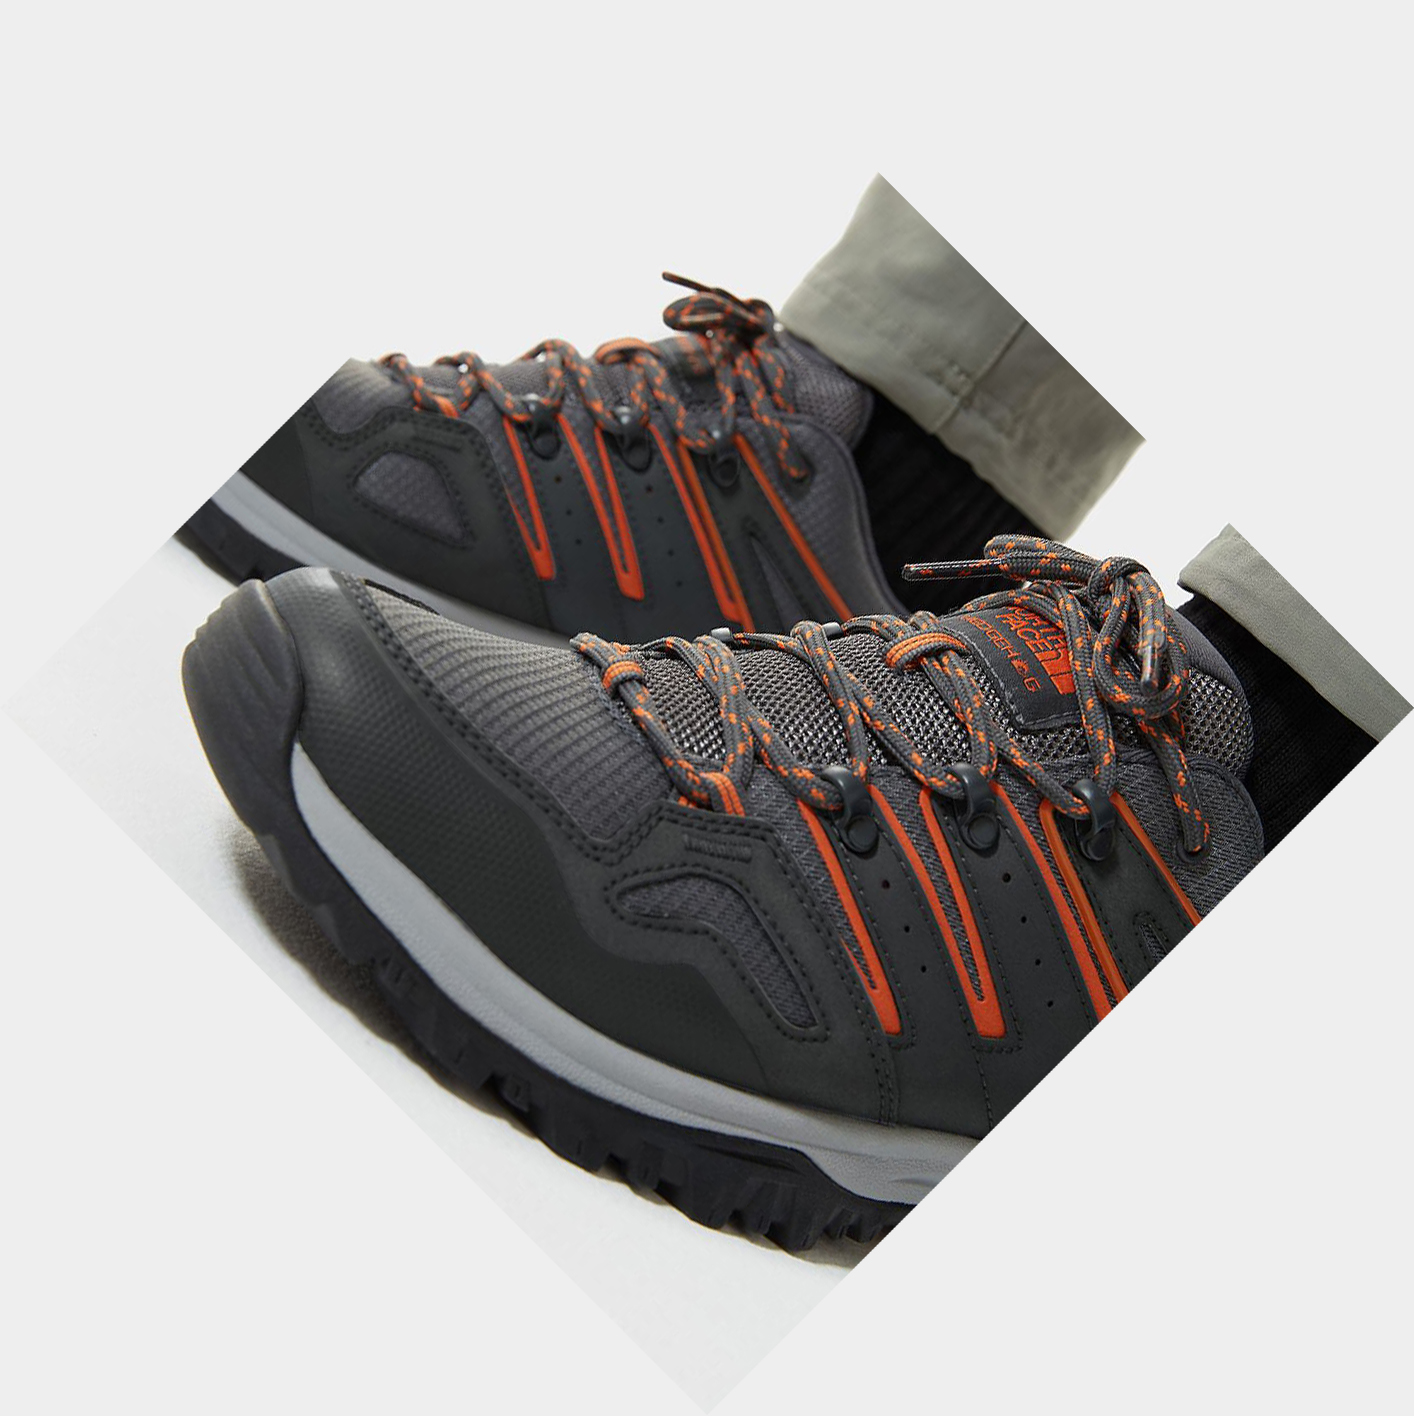 Men's The North Face HEDGEHOG FUTURELIGHT™ Hiking Shoes Grey Black | US940KSUW